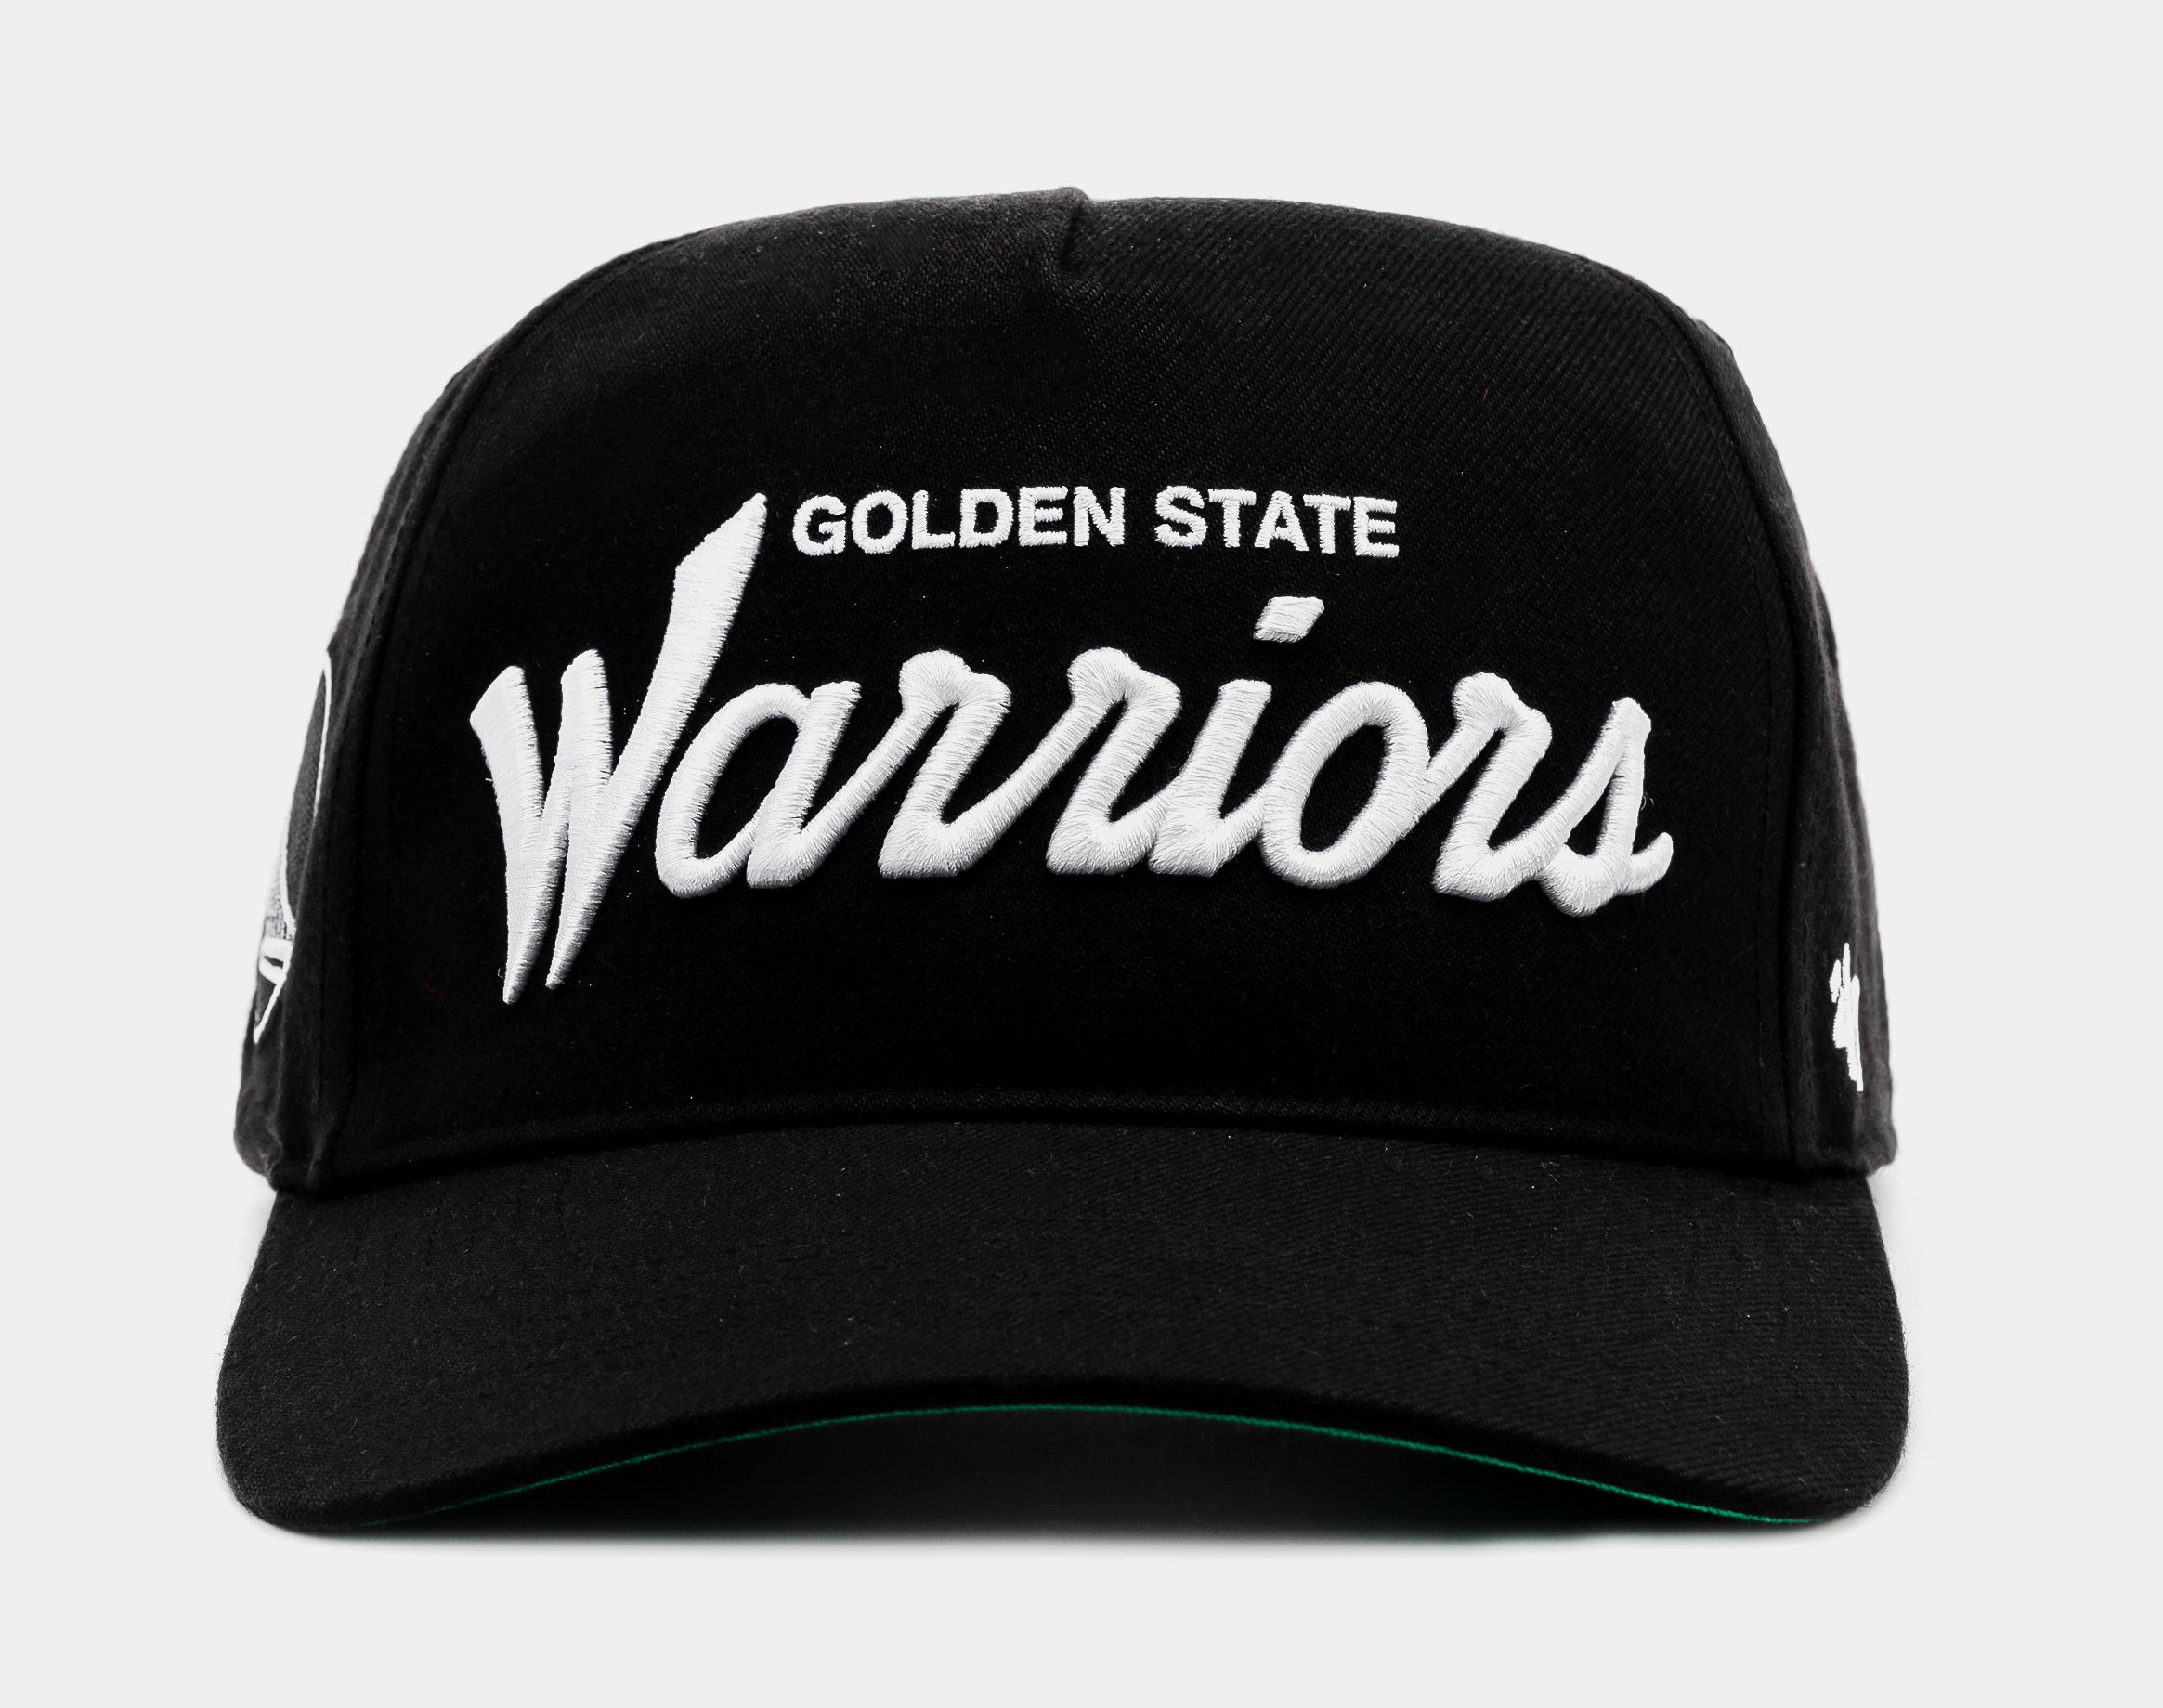 GIII/STARTER Shoe Palace Exclusive Golden State Warriors Mens Jacket (Blue)